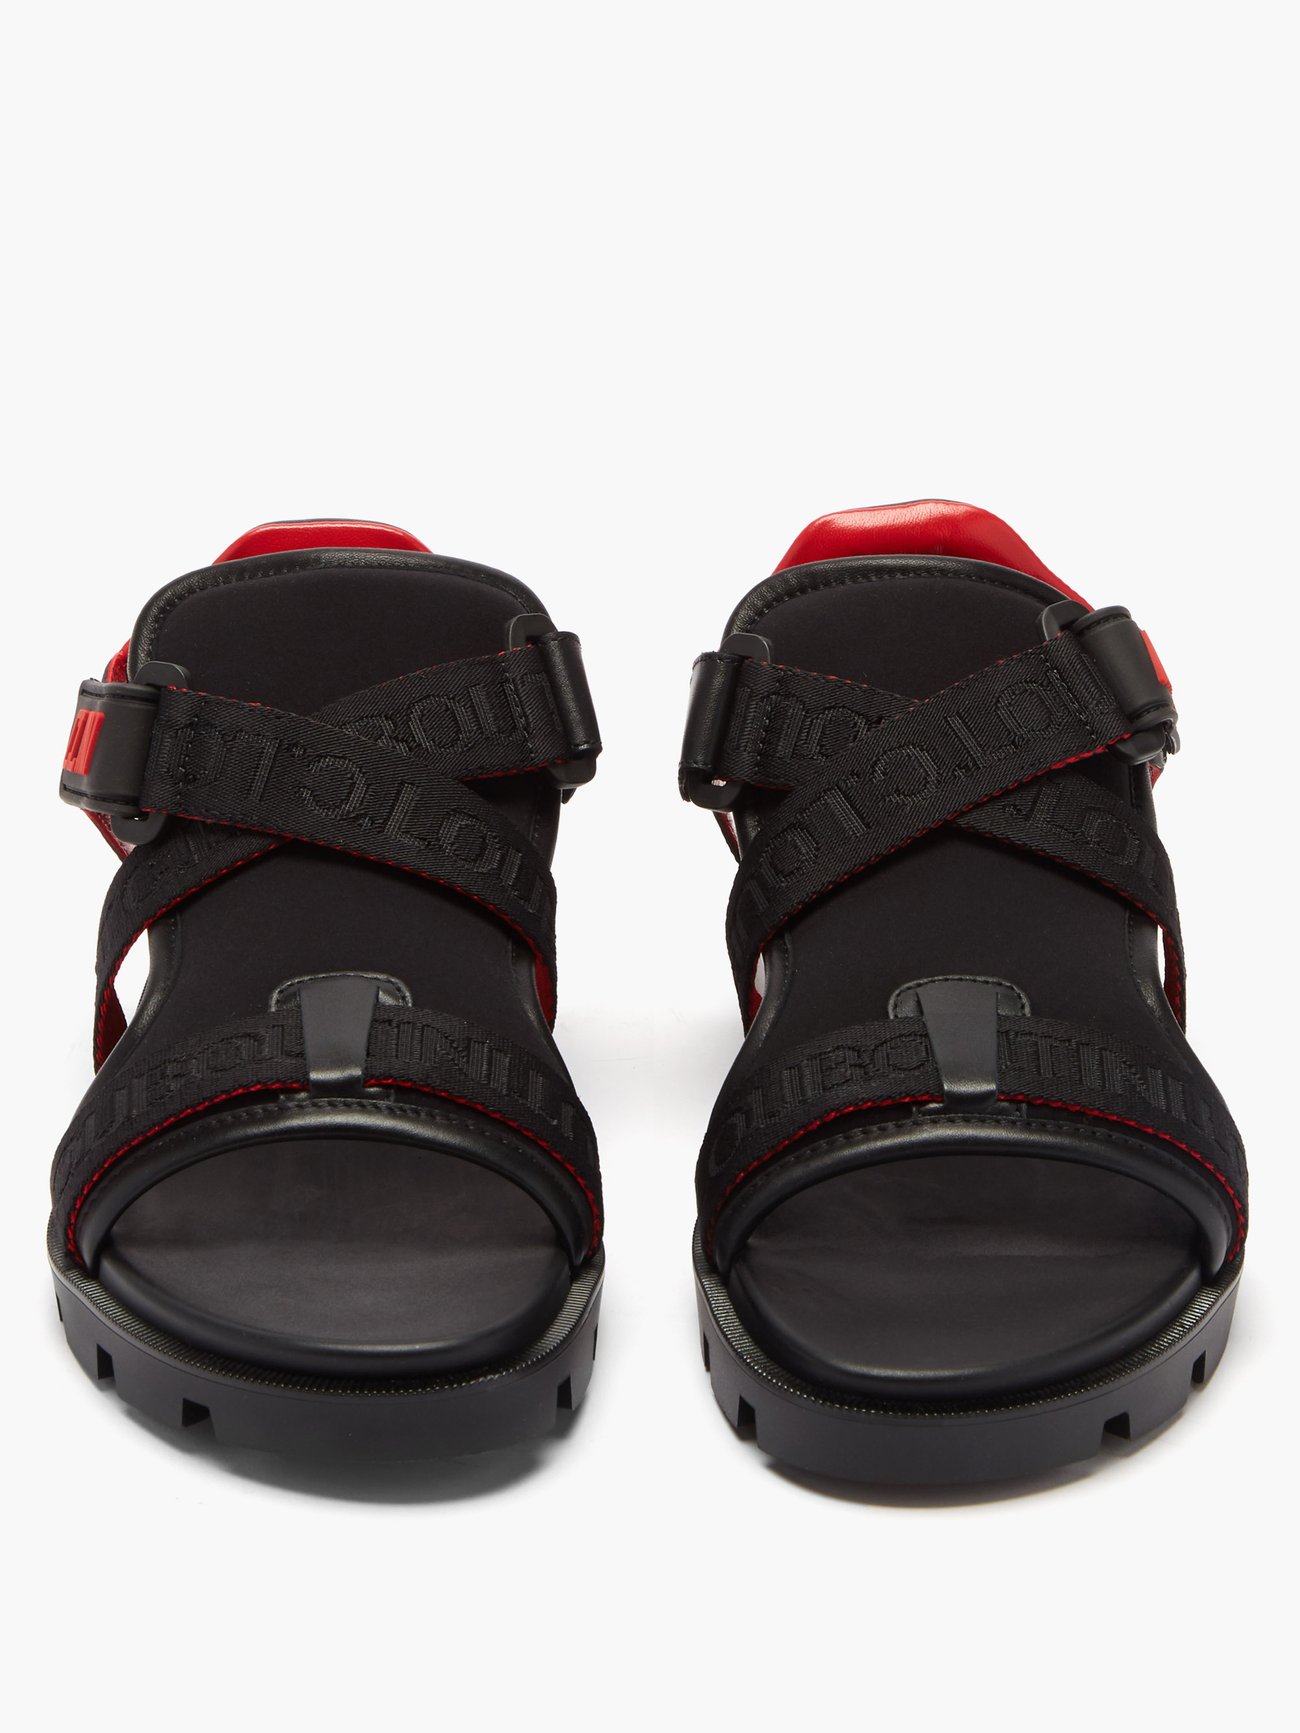 Christian Louboutin, Shoes, New Christian Louboutin Velcrissimo Summer  Sandal Size 38